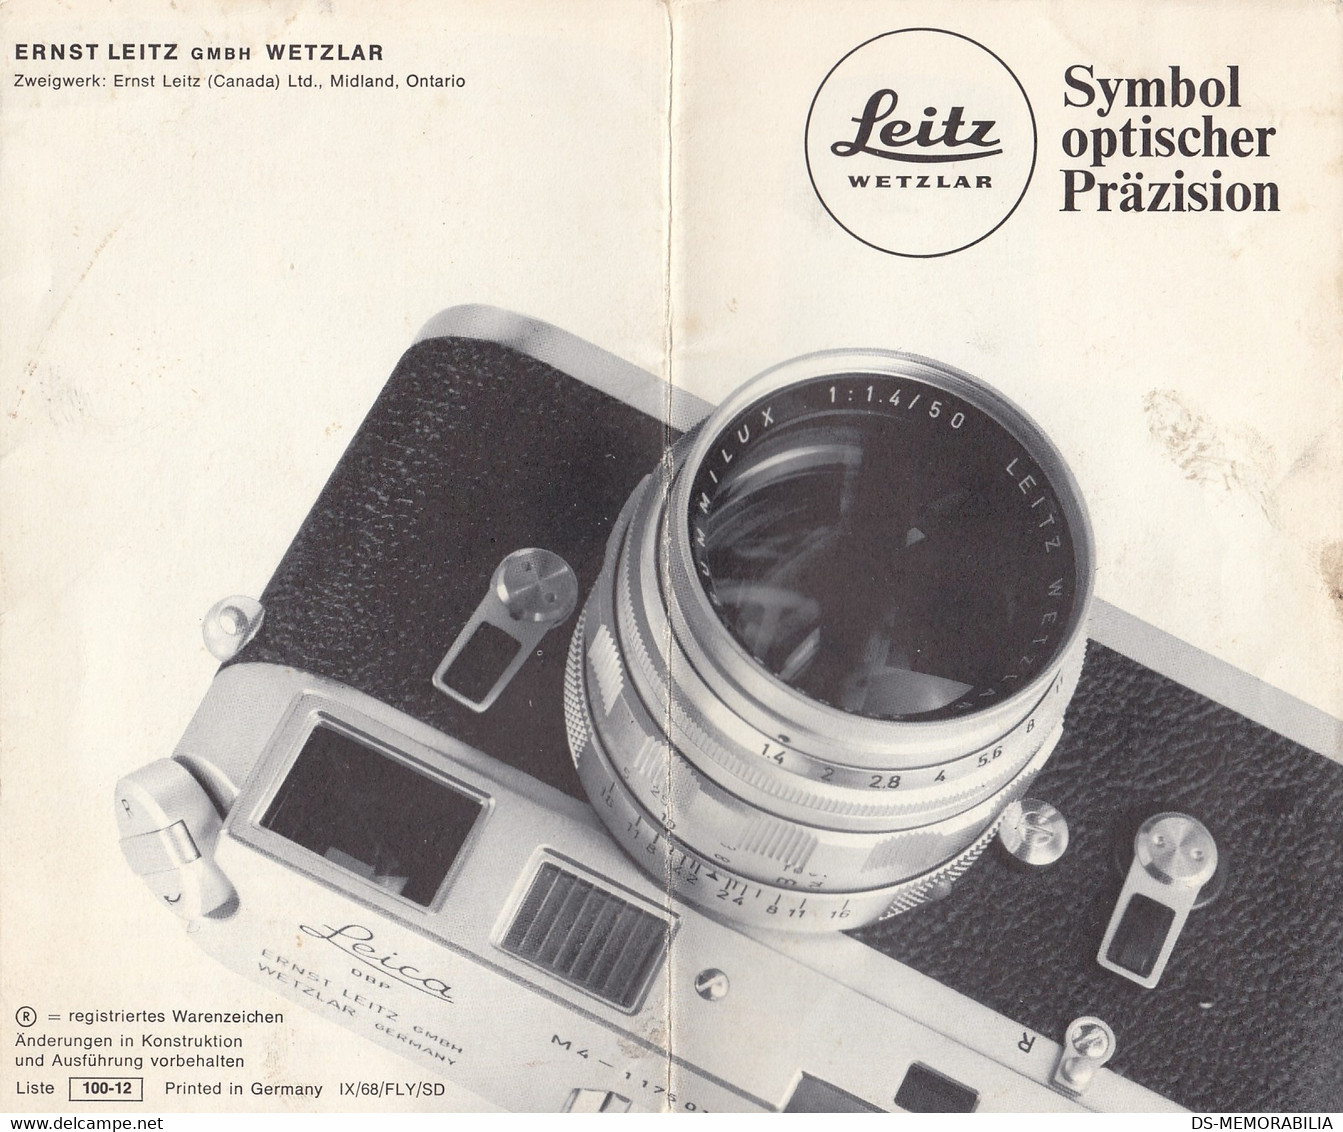 1968 Leica Leitz Wetzlar Germany Projectors Cameras Lenses Prospect Brochure - Lentes